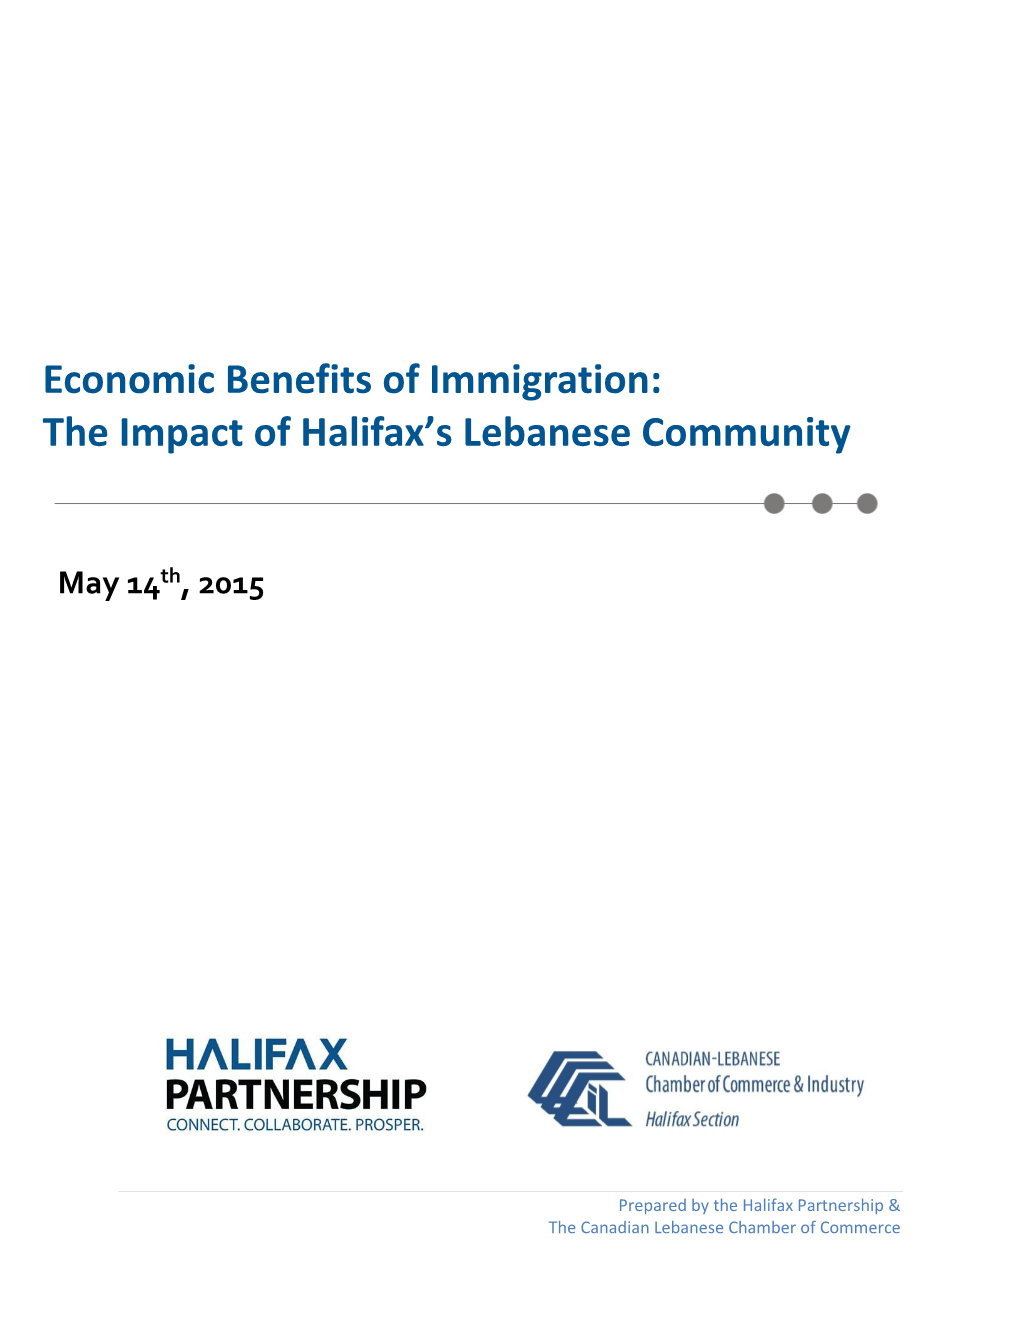 Economic Benefits of Immigration: the Impact of Halifax's Lebanese